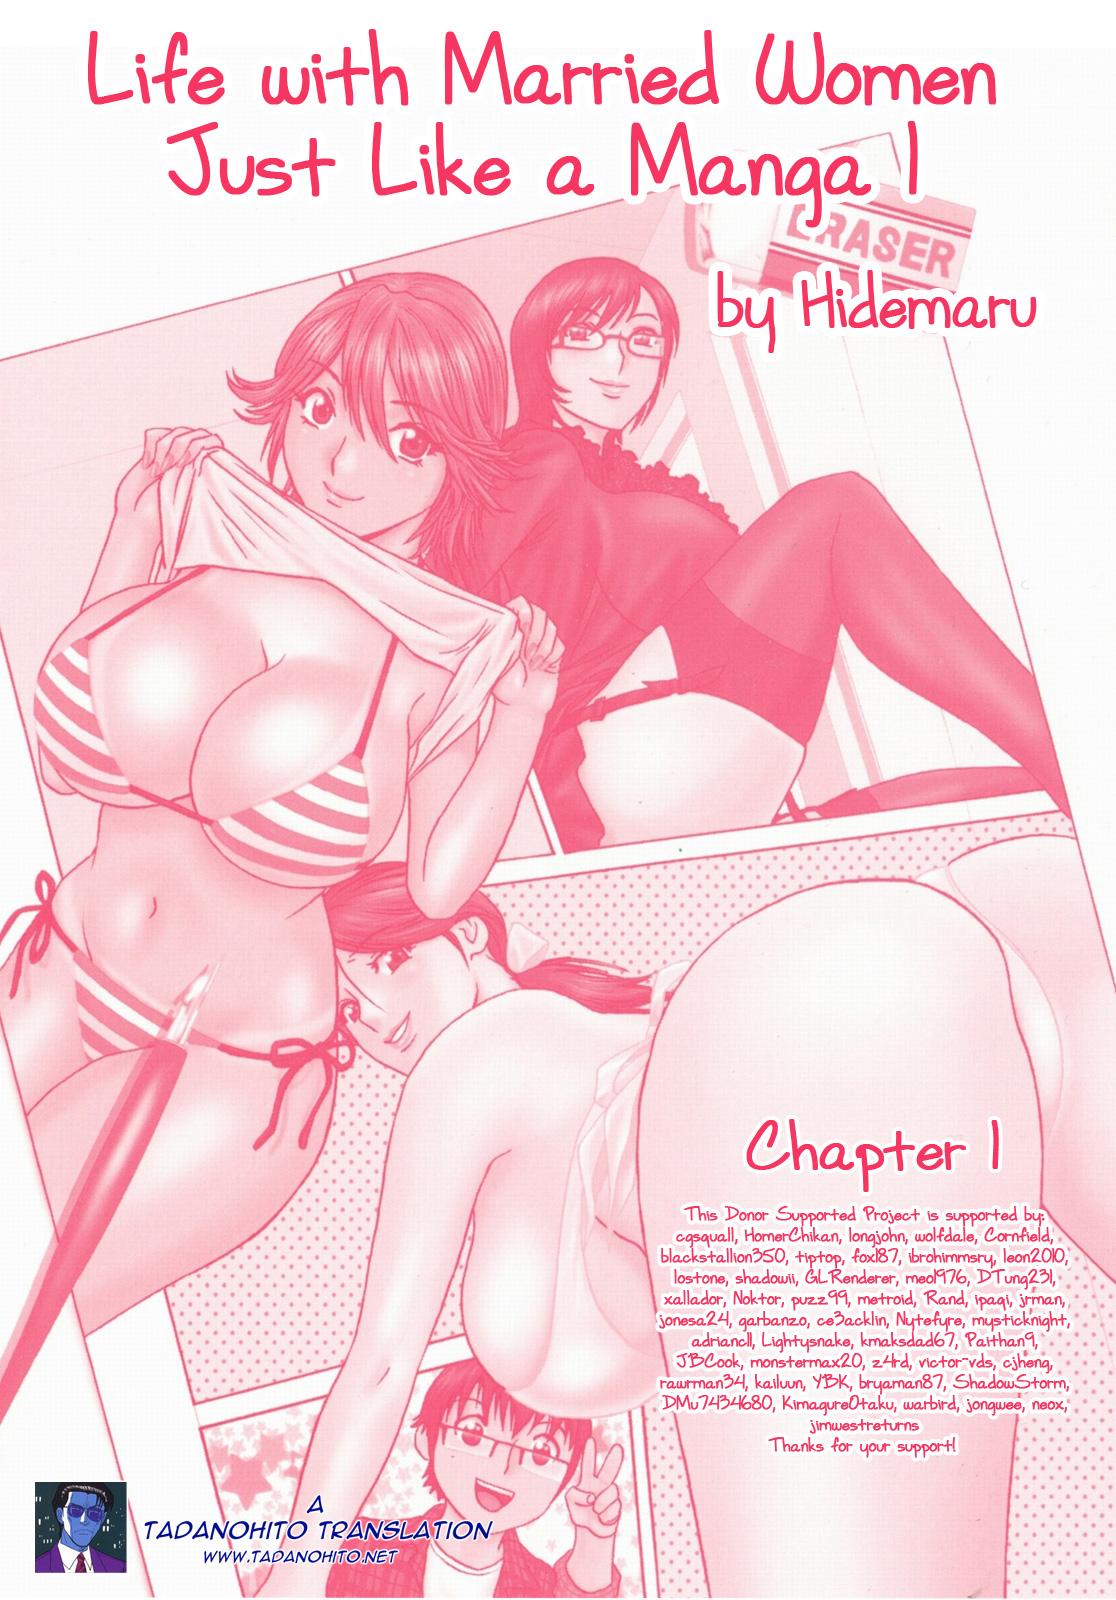 [Hidemaru] Life with Married Women Just Like a Manga 1 - Ch. 1-5 [English] {Tadanohito} 25